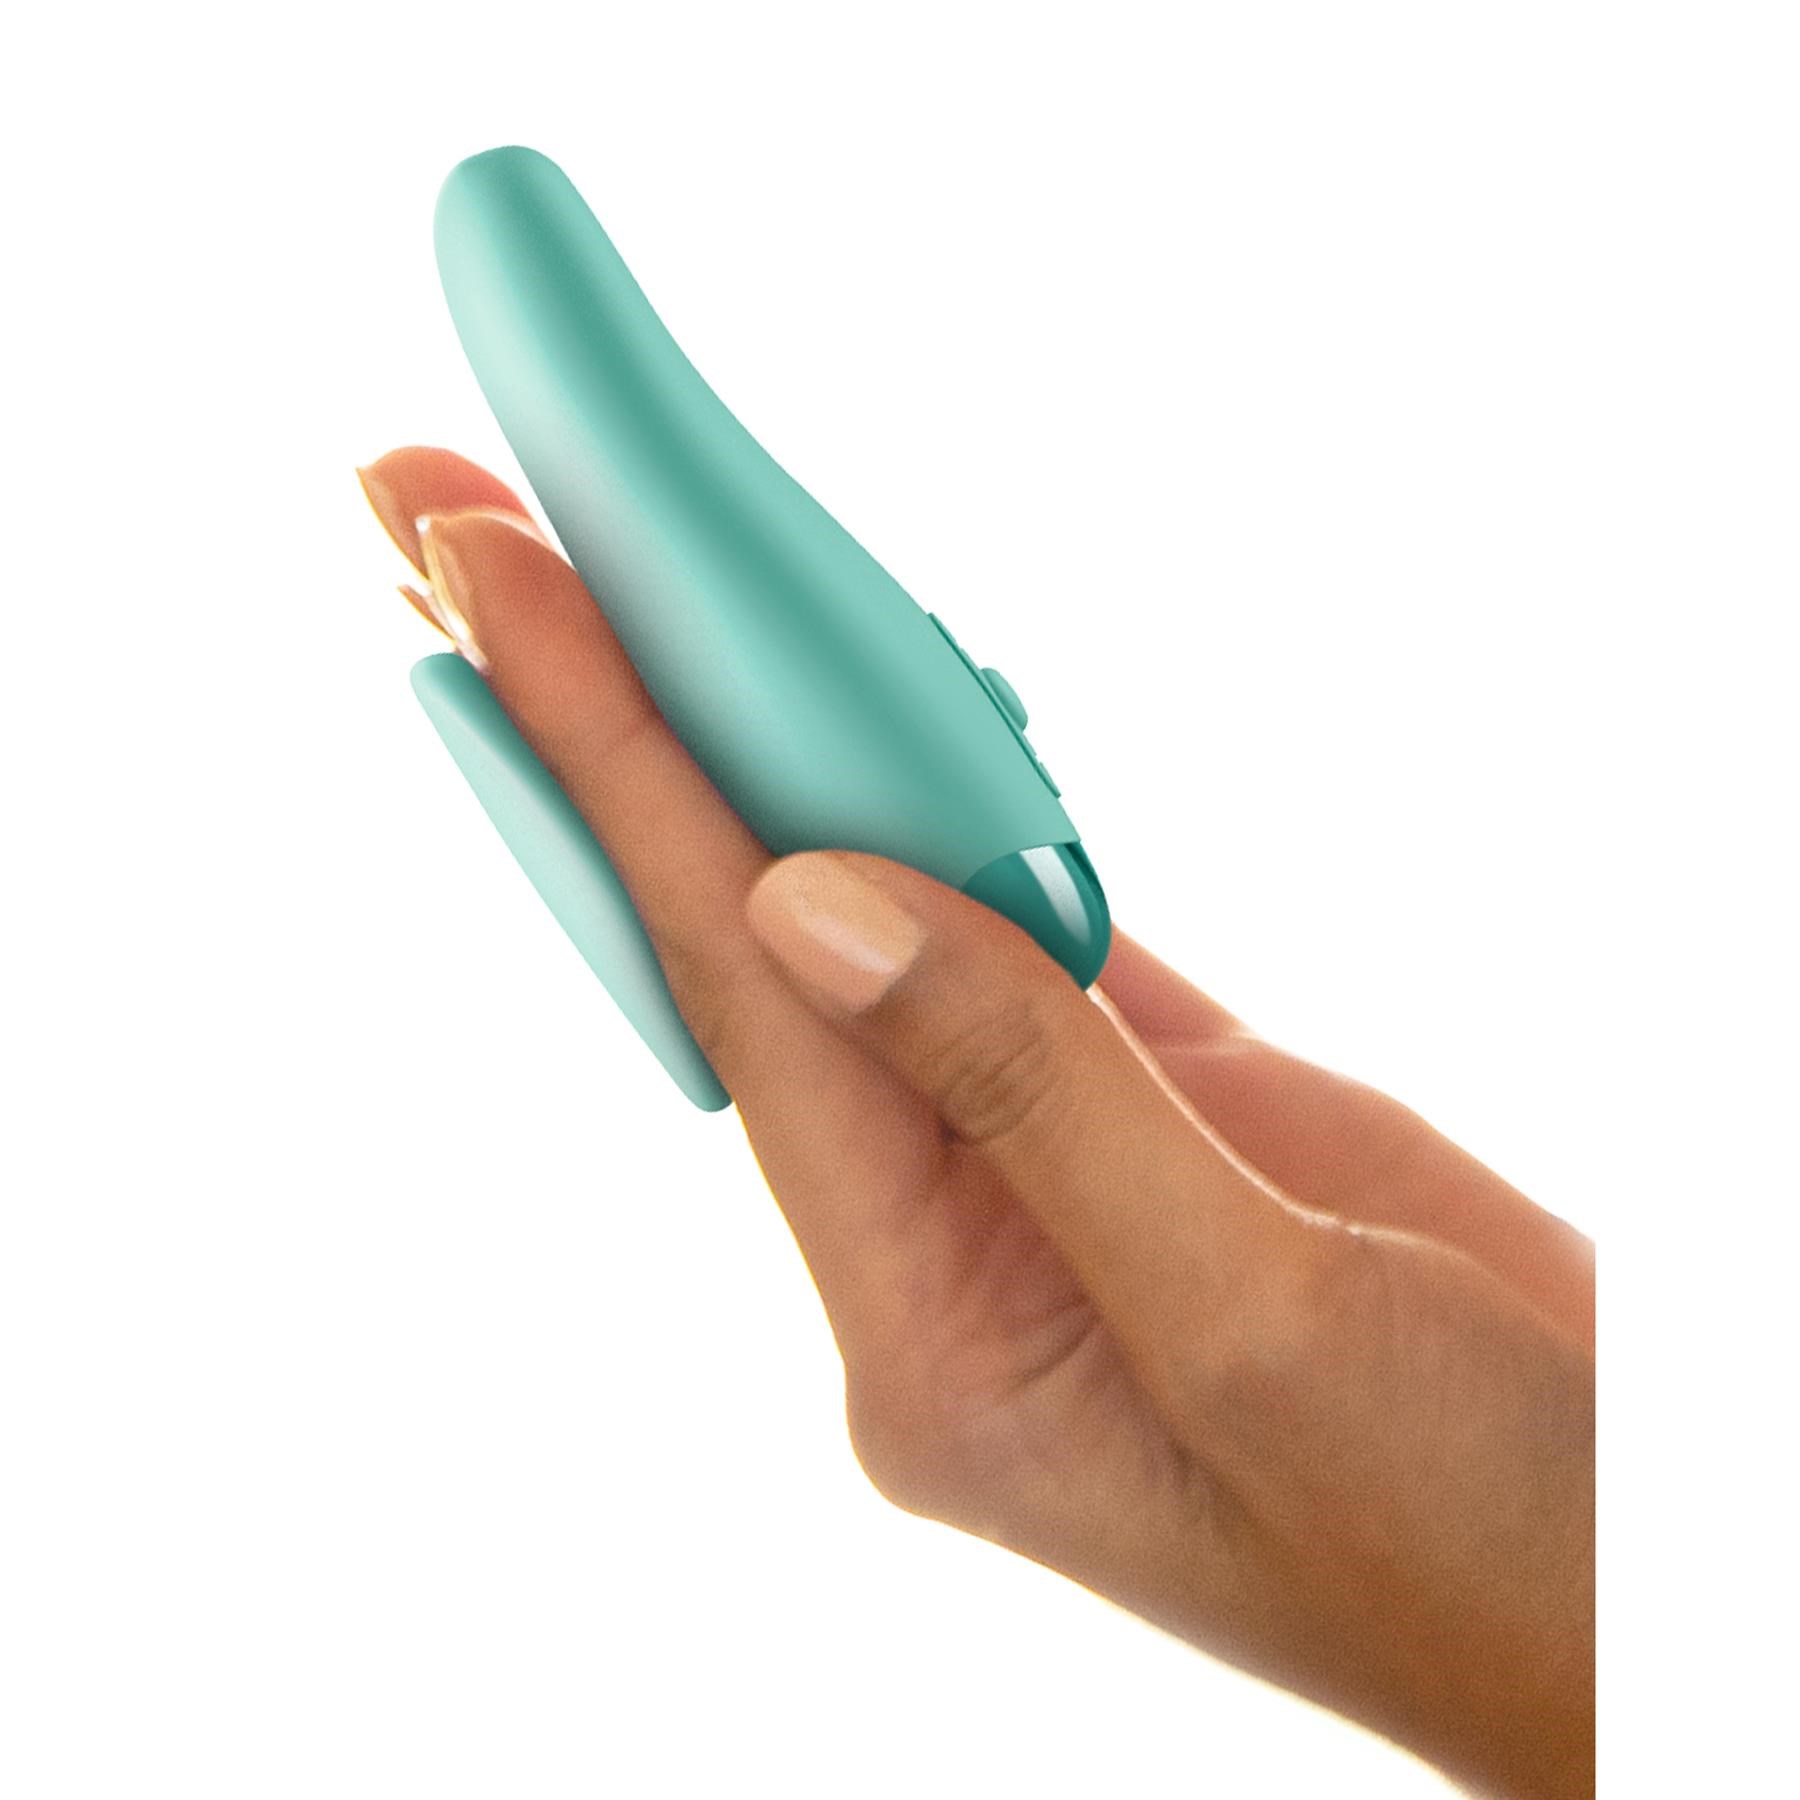 Jimmy Jane Form 2 Gripp Finger Vibrator - Hand Shot